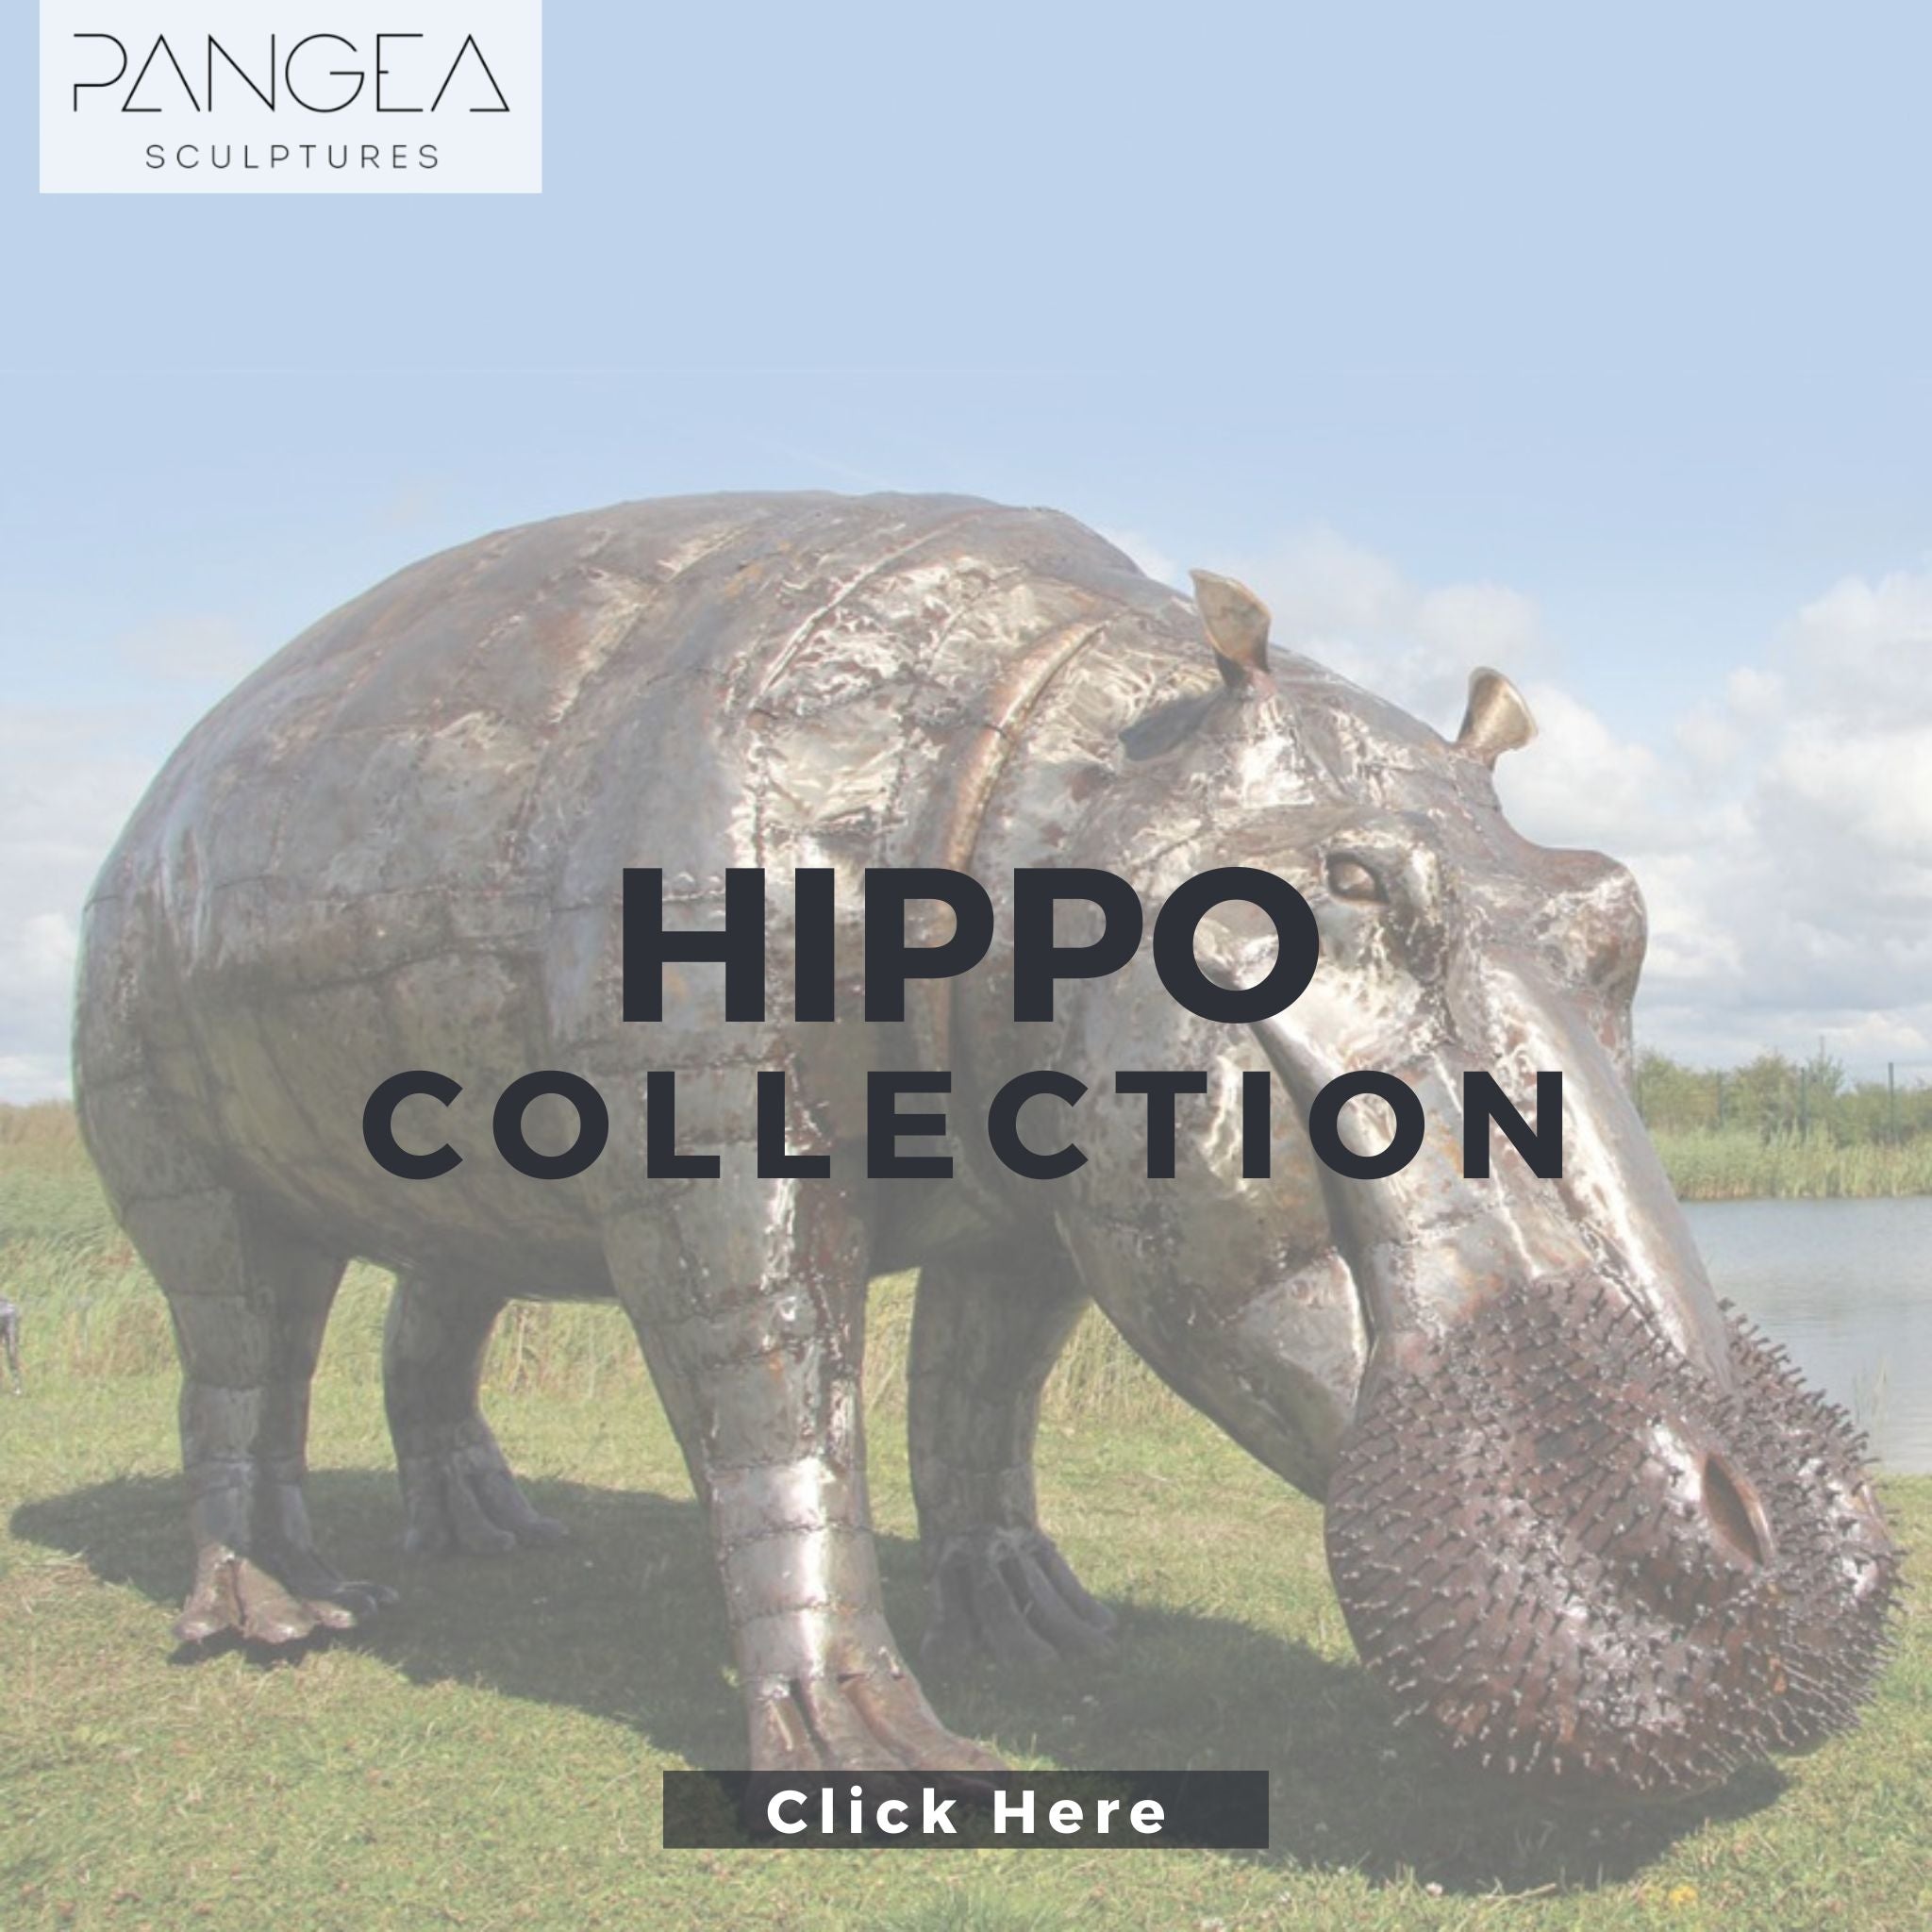 Hippo Sculptures - Pangea Sculptures